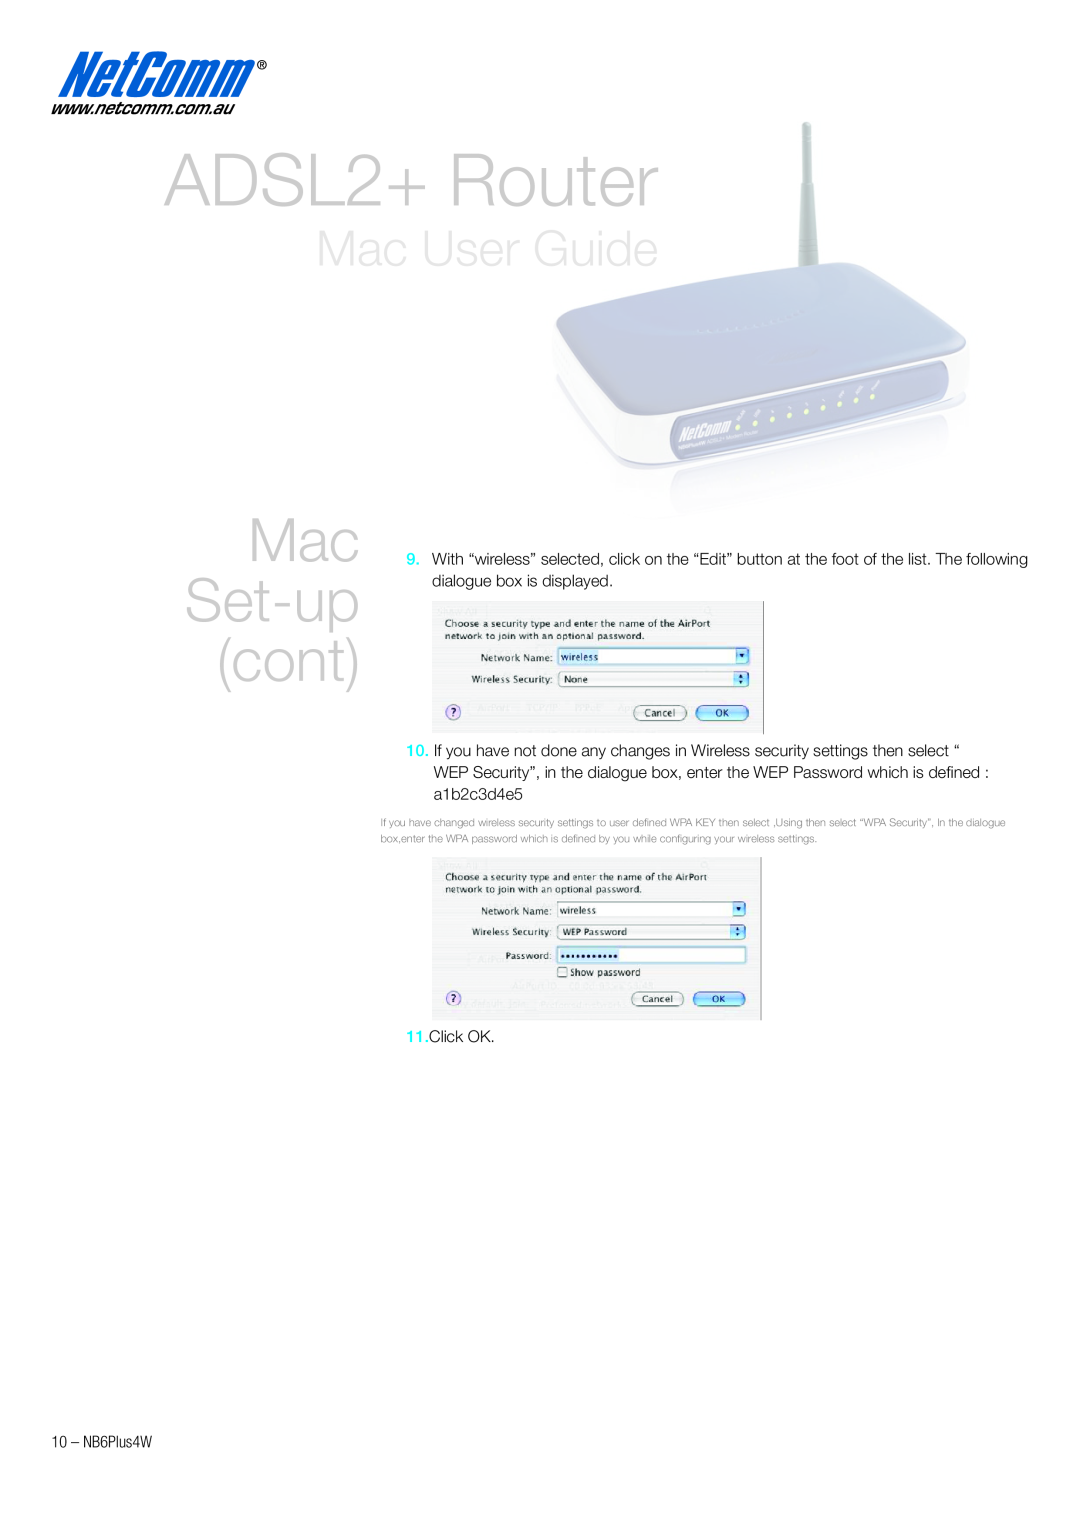 NetComm NB6PLUS4W quick start ADSL2+ Router, Mac Set-up cont, Mac User Guide, Click OK 